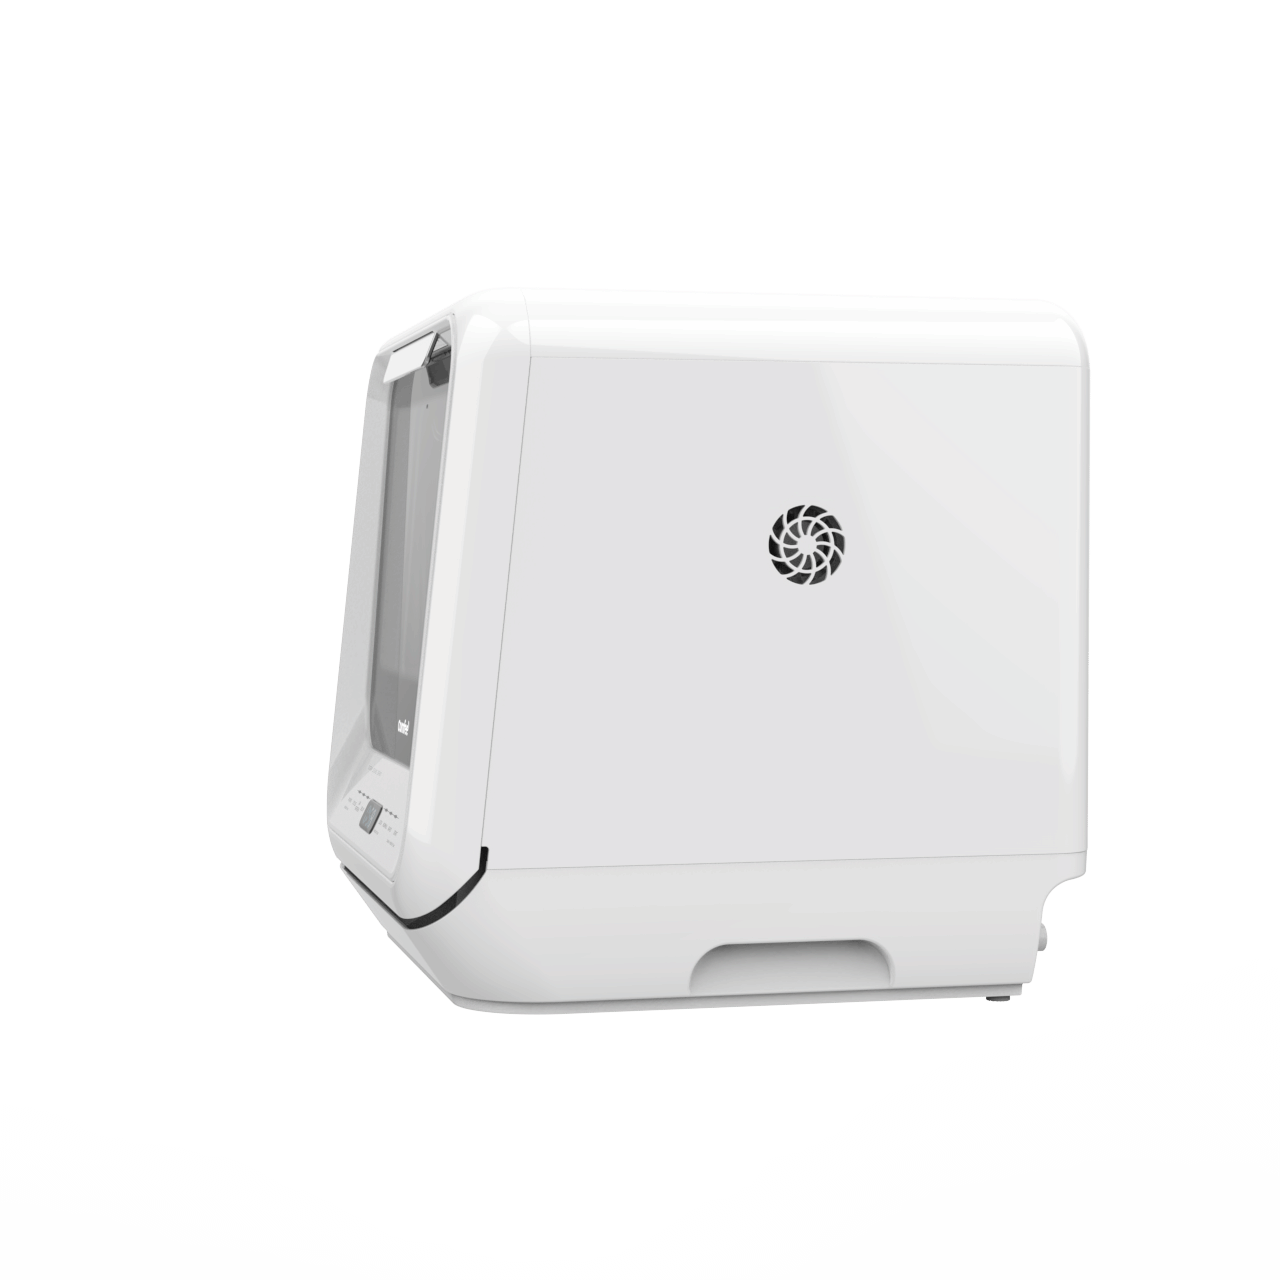 Comfee' Portable Dishwasher Countertop, Mini Dishwasher With 5l